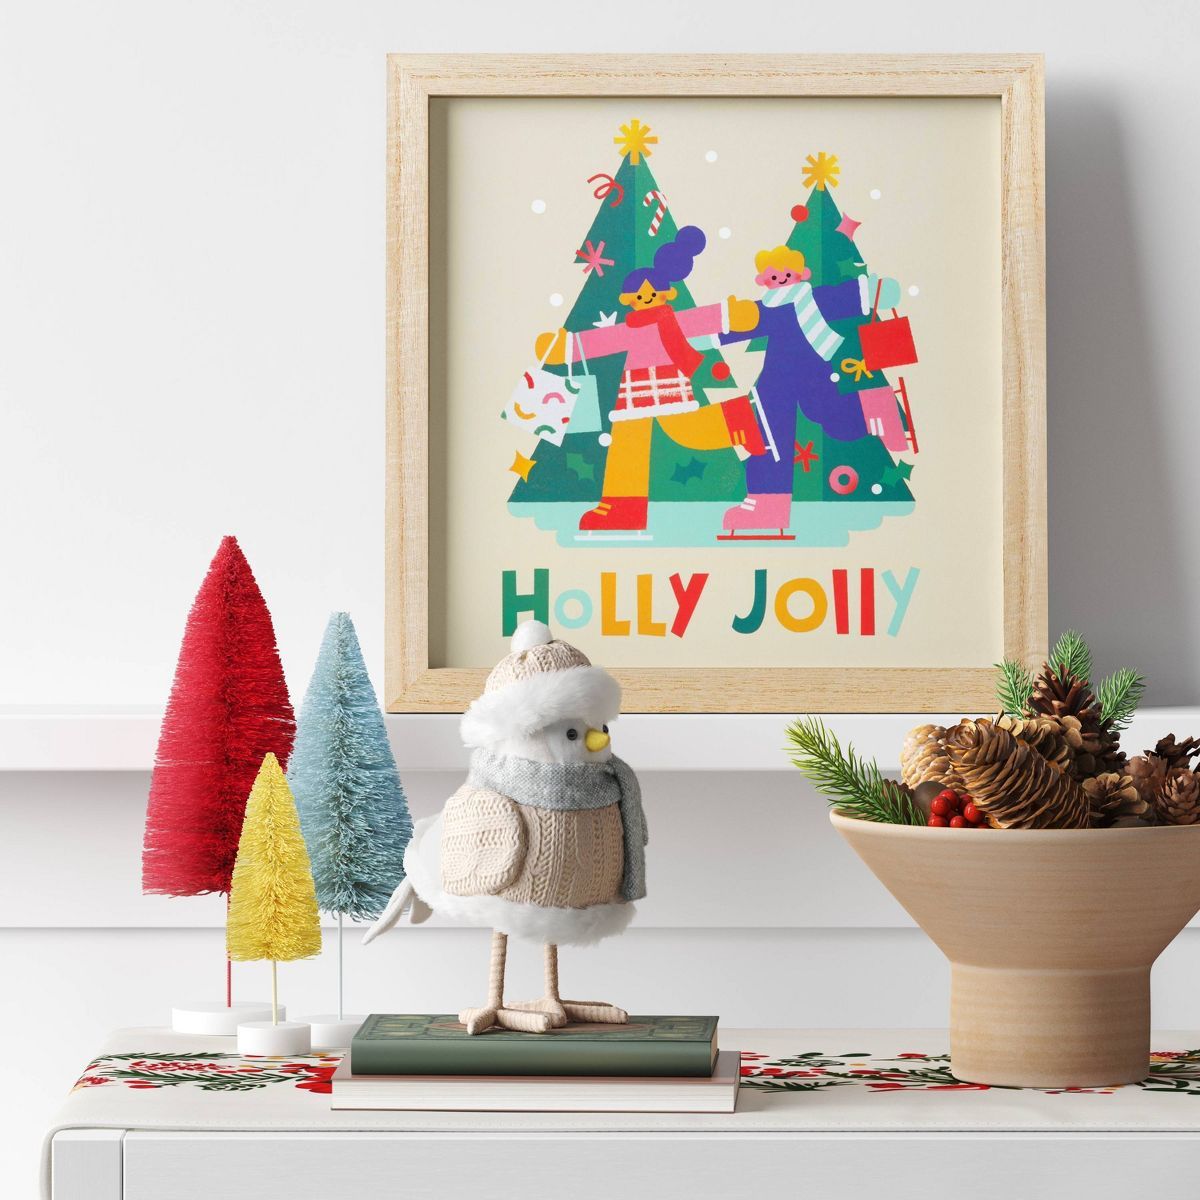 Yiffy Gu 12"x12" 'Holly Jolly' Ice Skating Framed Christmas Wall Art - Wondershop™ | Target